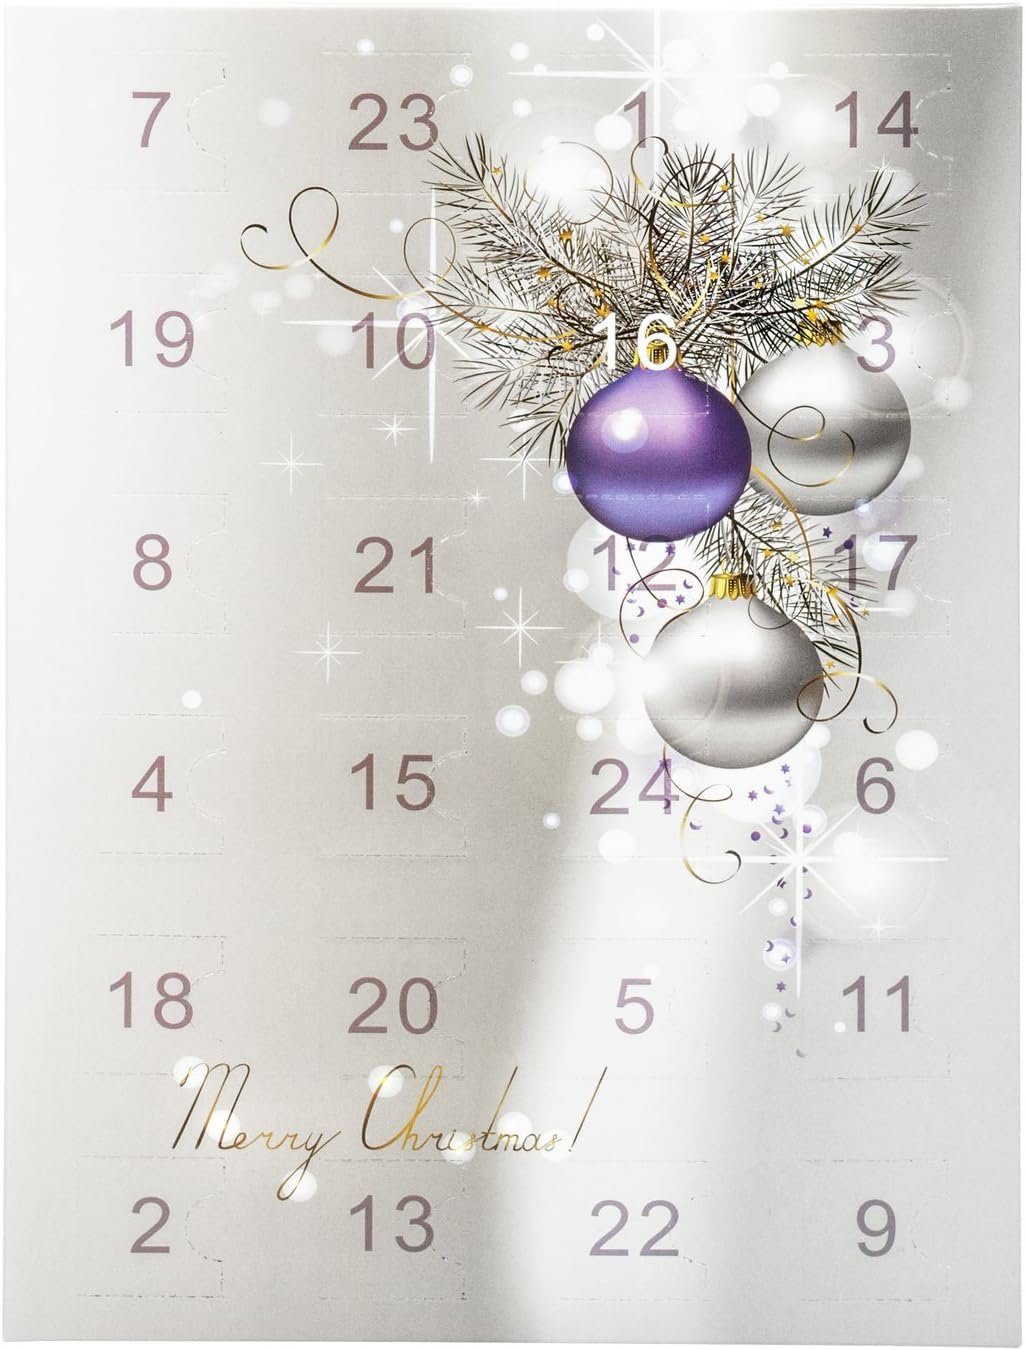 VALIOSA Armband Perlen-Anhänger Christmas' Merry + Halskette, Schmuck-Adventskalender, individuelle 22